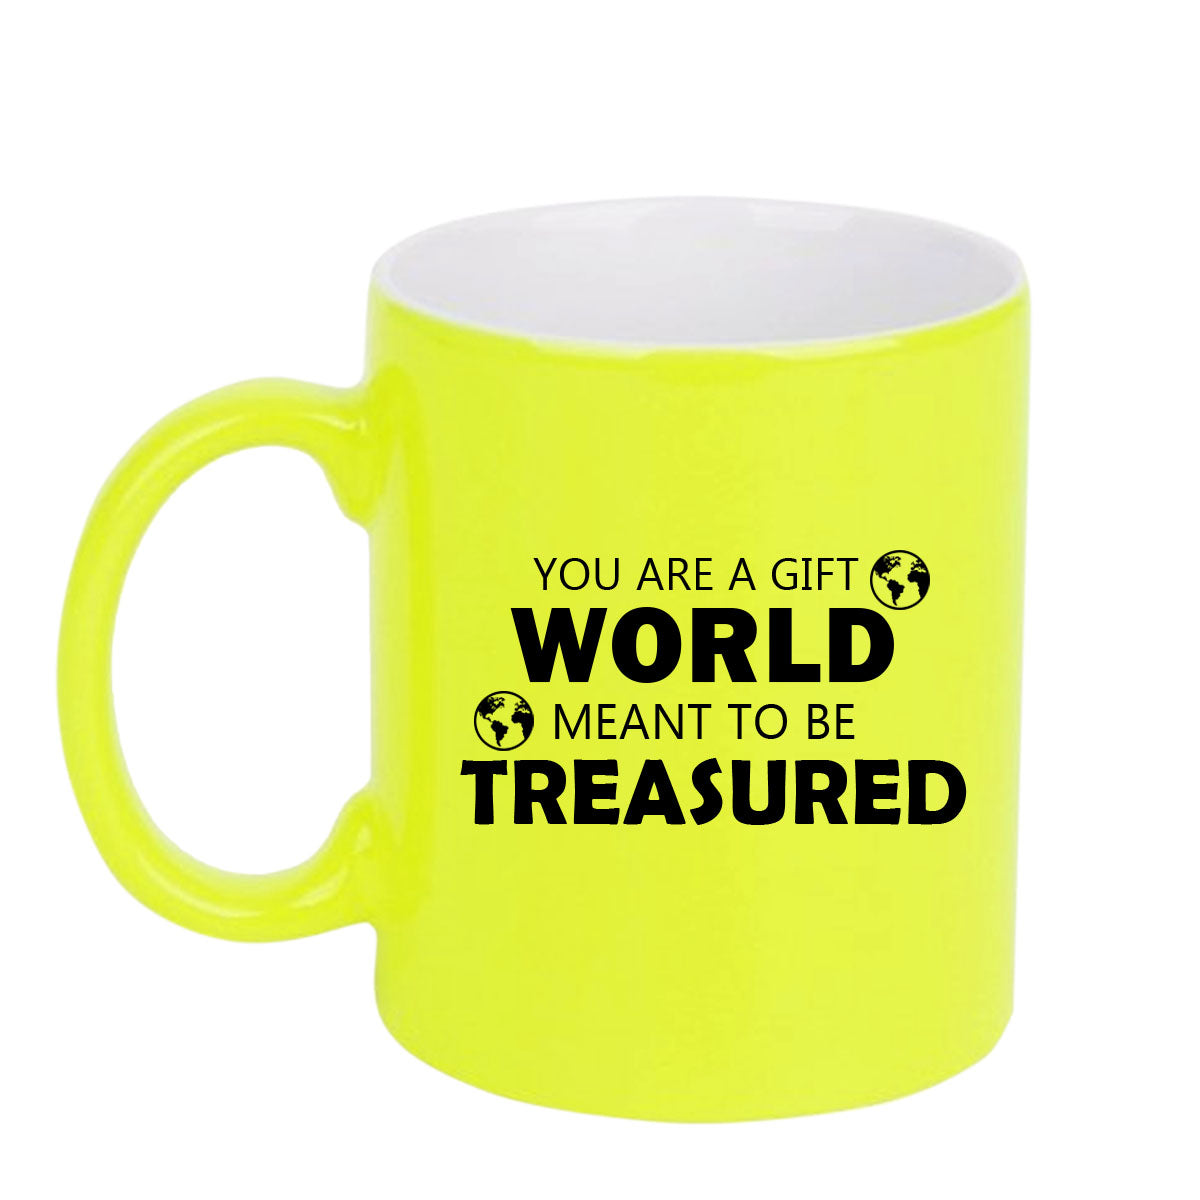 Chillaao  You are a gift world  neon Yellow  mug